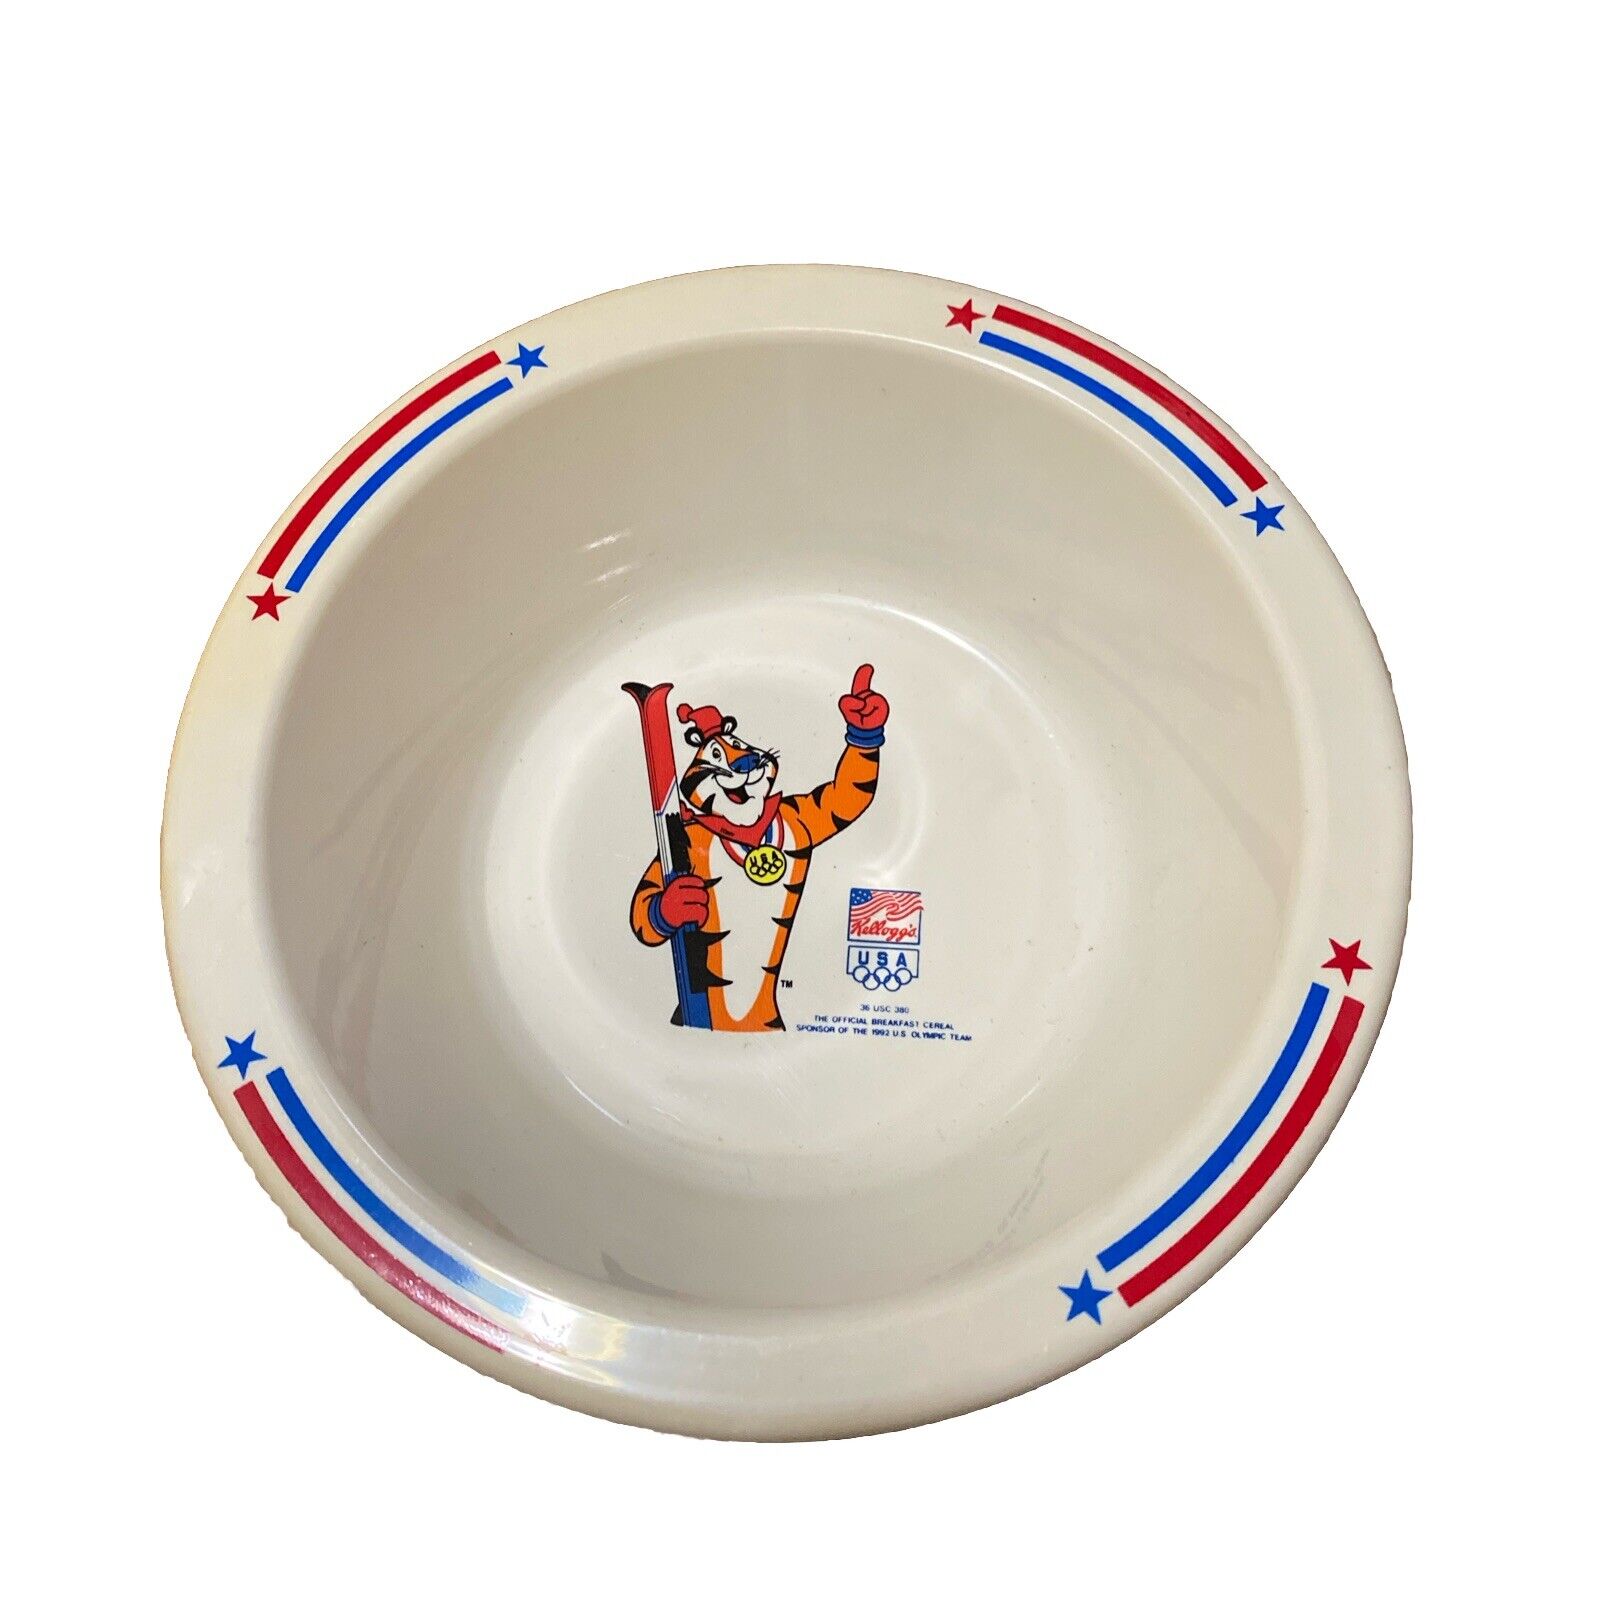 Kellogg\'s Tony the Tiger Cereal Bowl and Spoon 1992 Olympics Skis